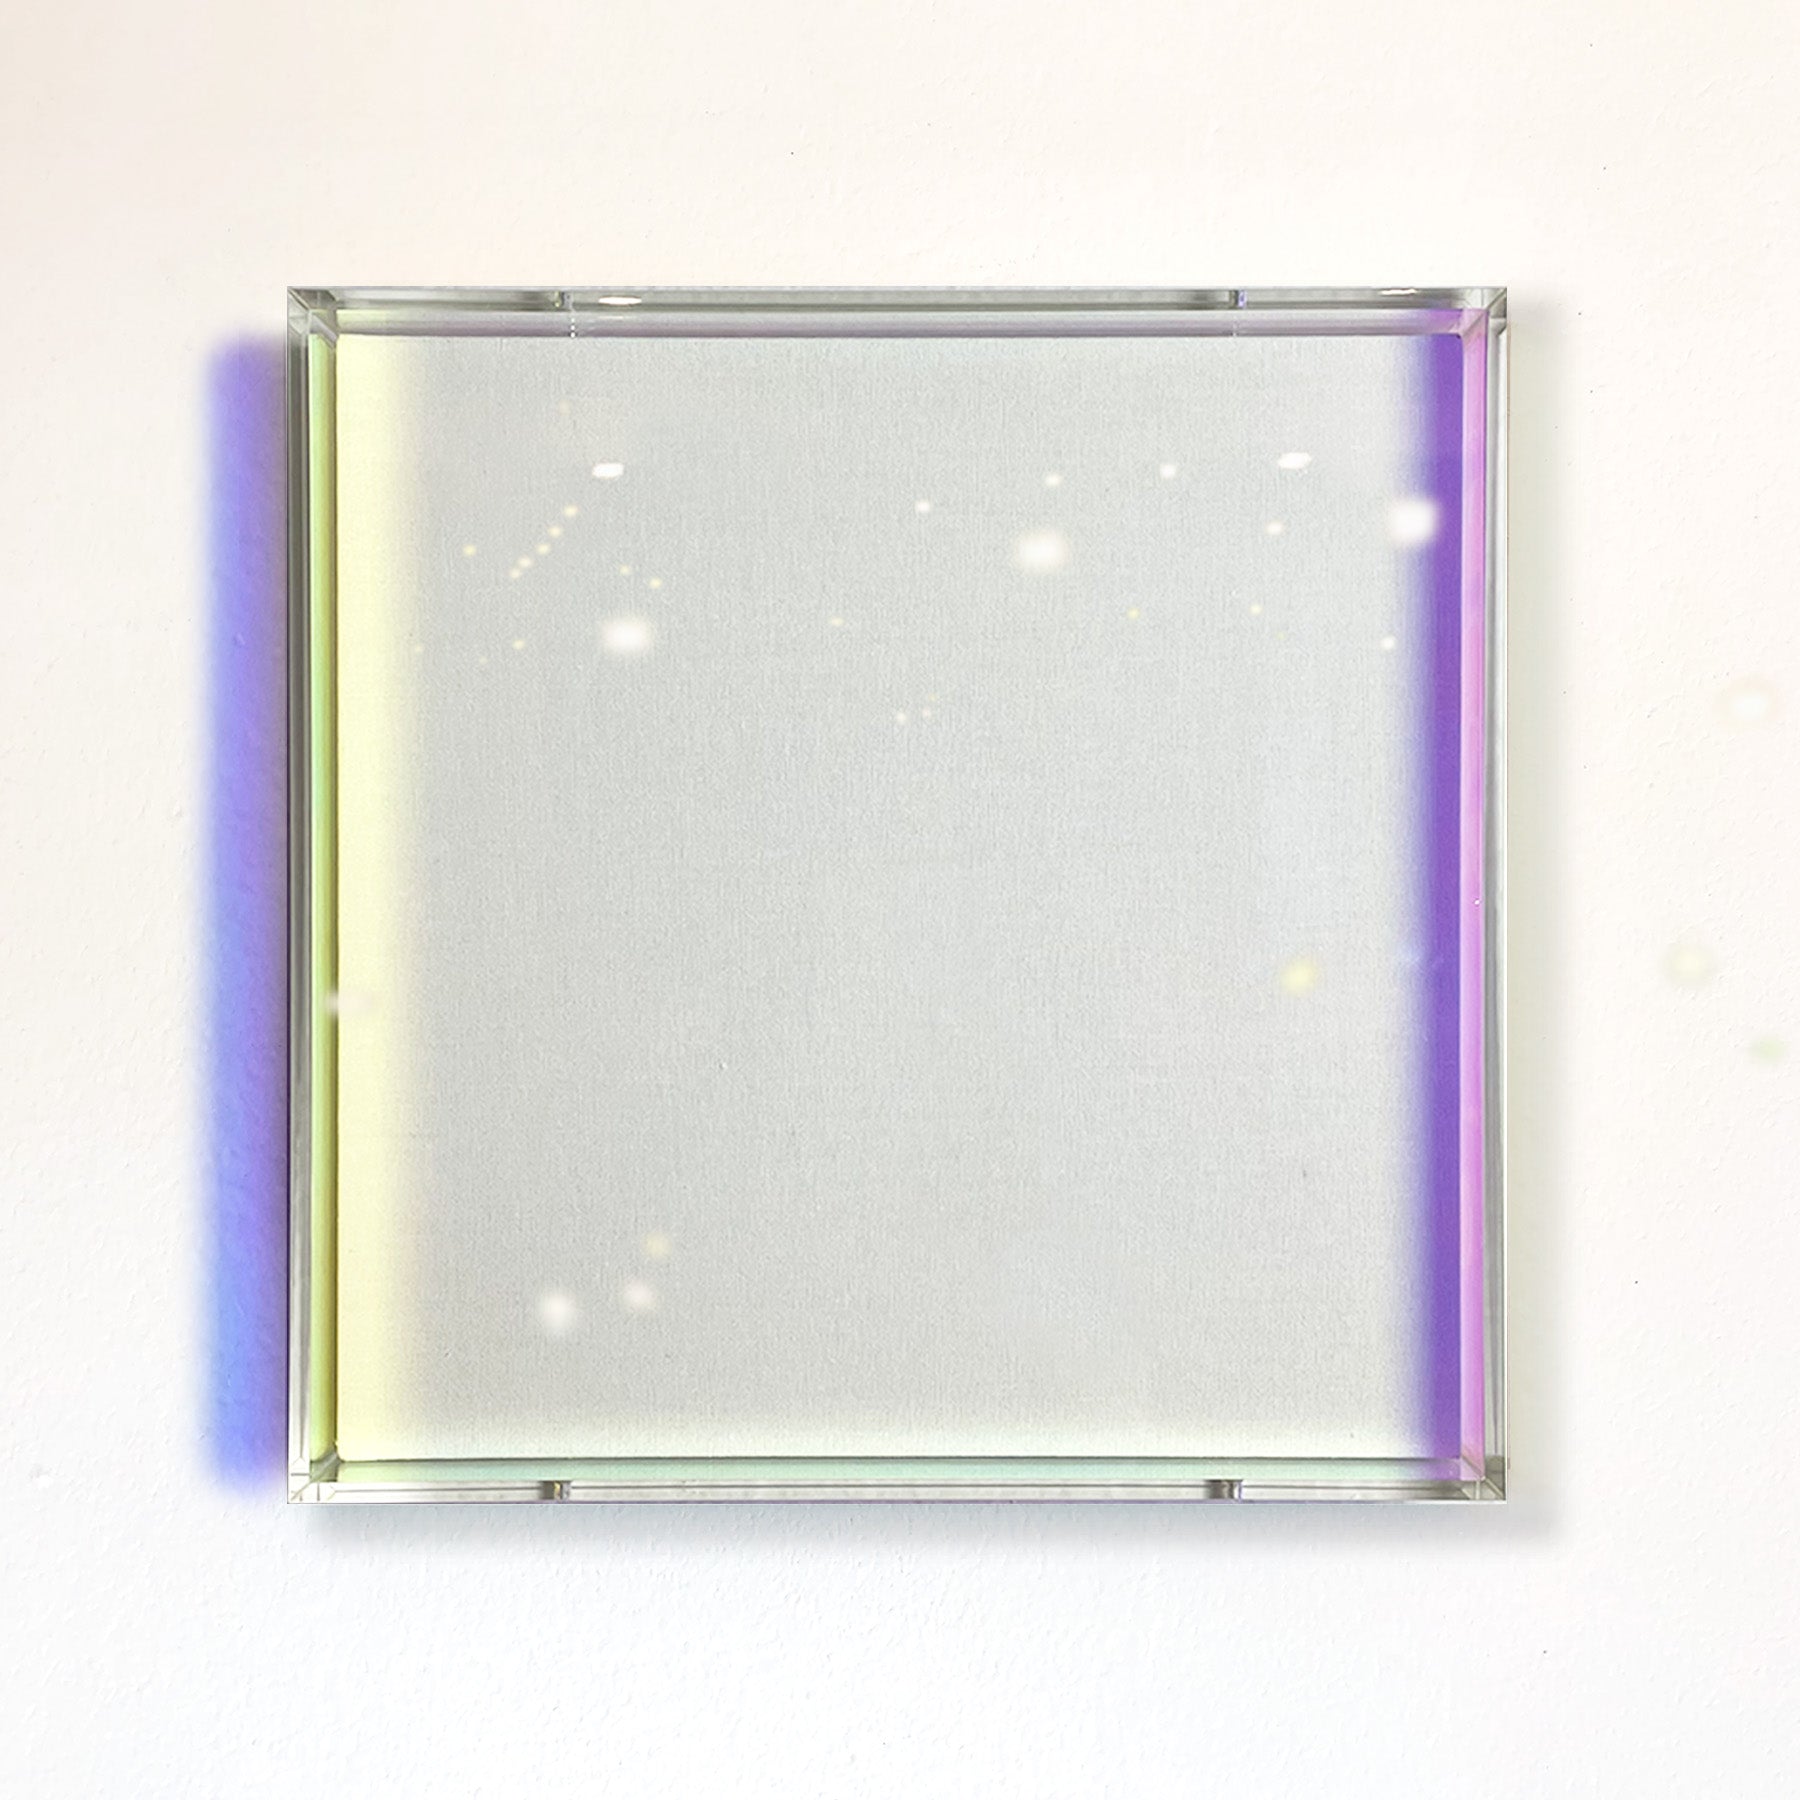 Case of 3, 20x20 Acrylic Box Frames